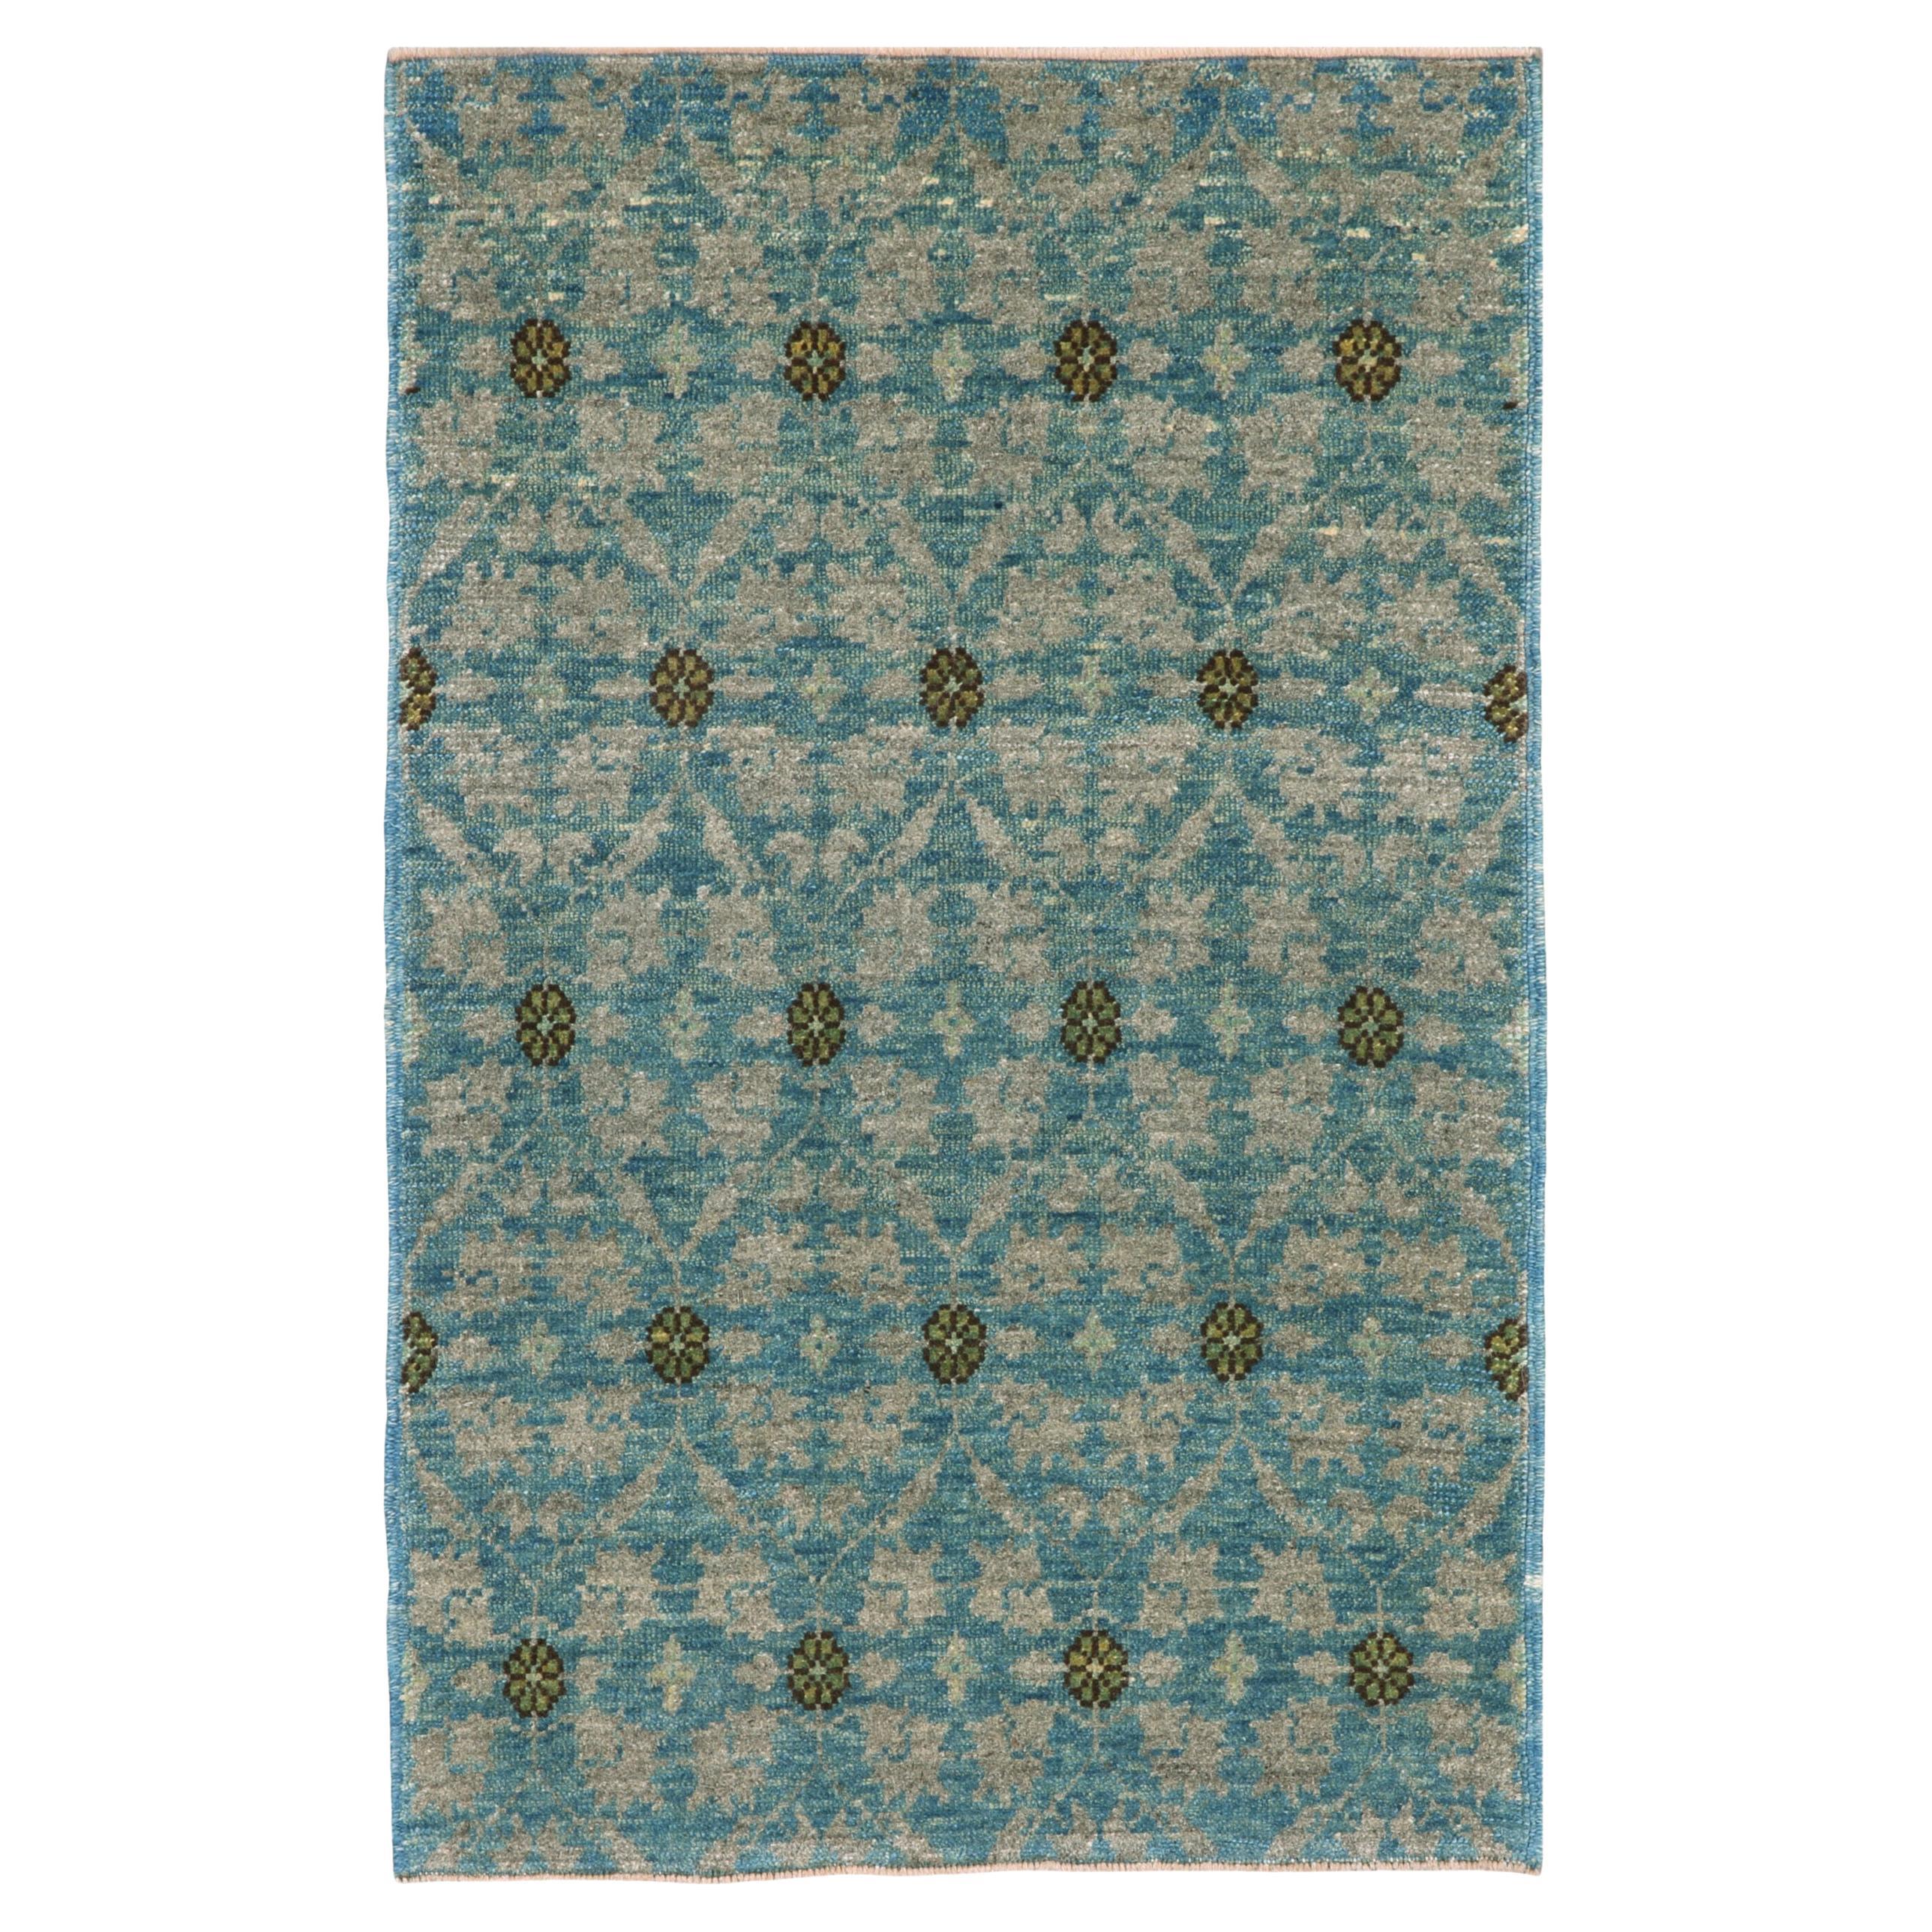 Ararat Kollektion – Mamluk Wagireh Teppich mit Blumengitter, Naturfarben